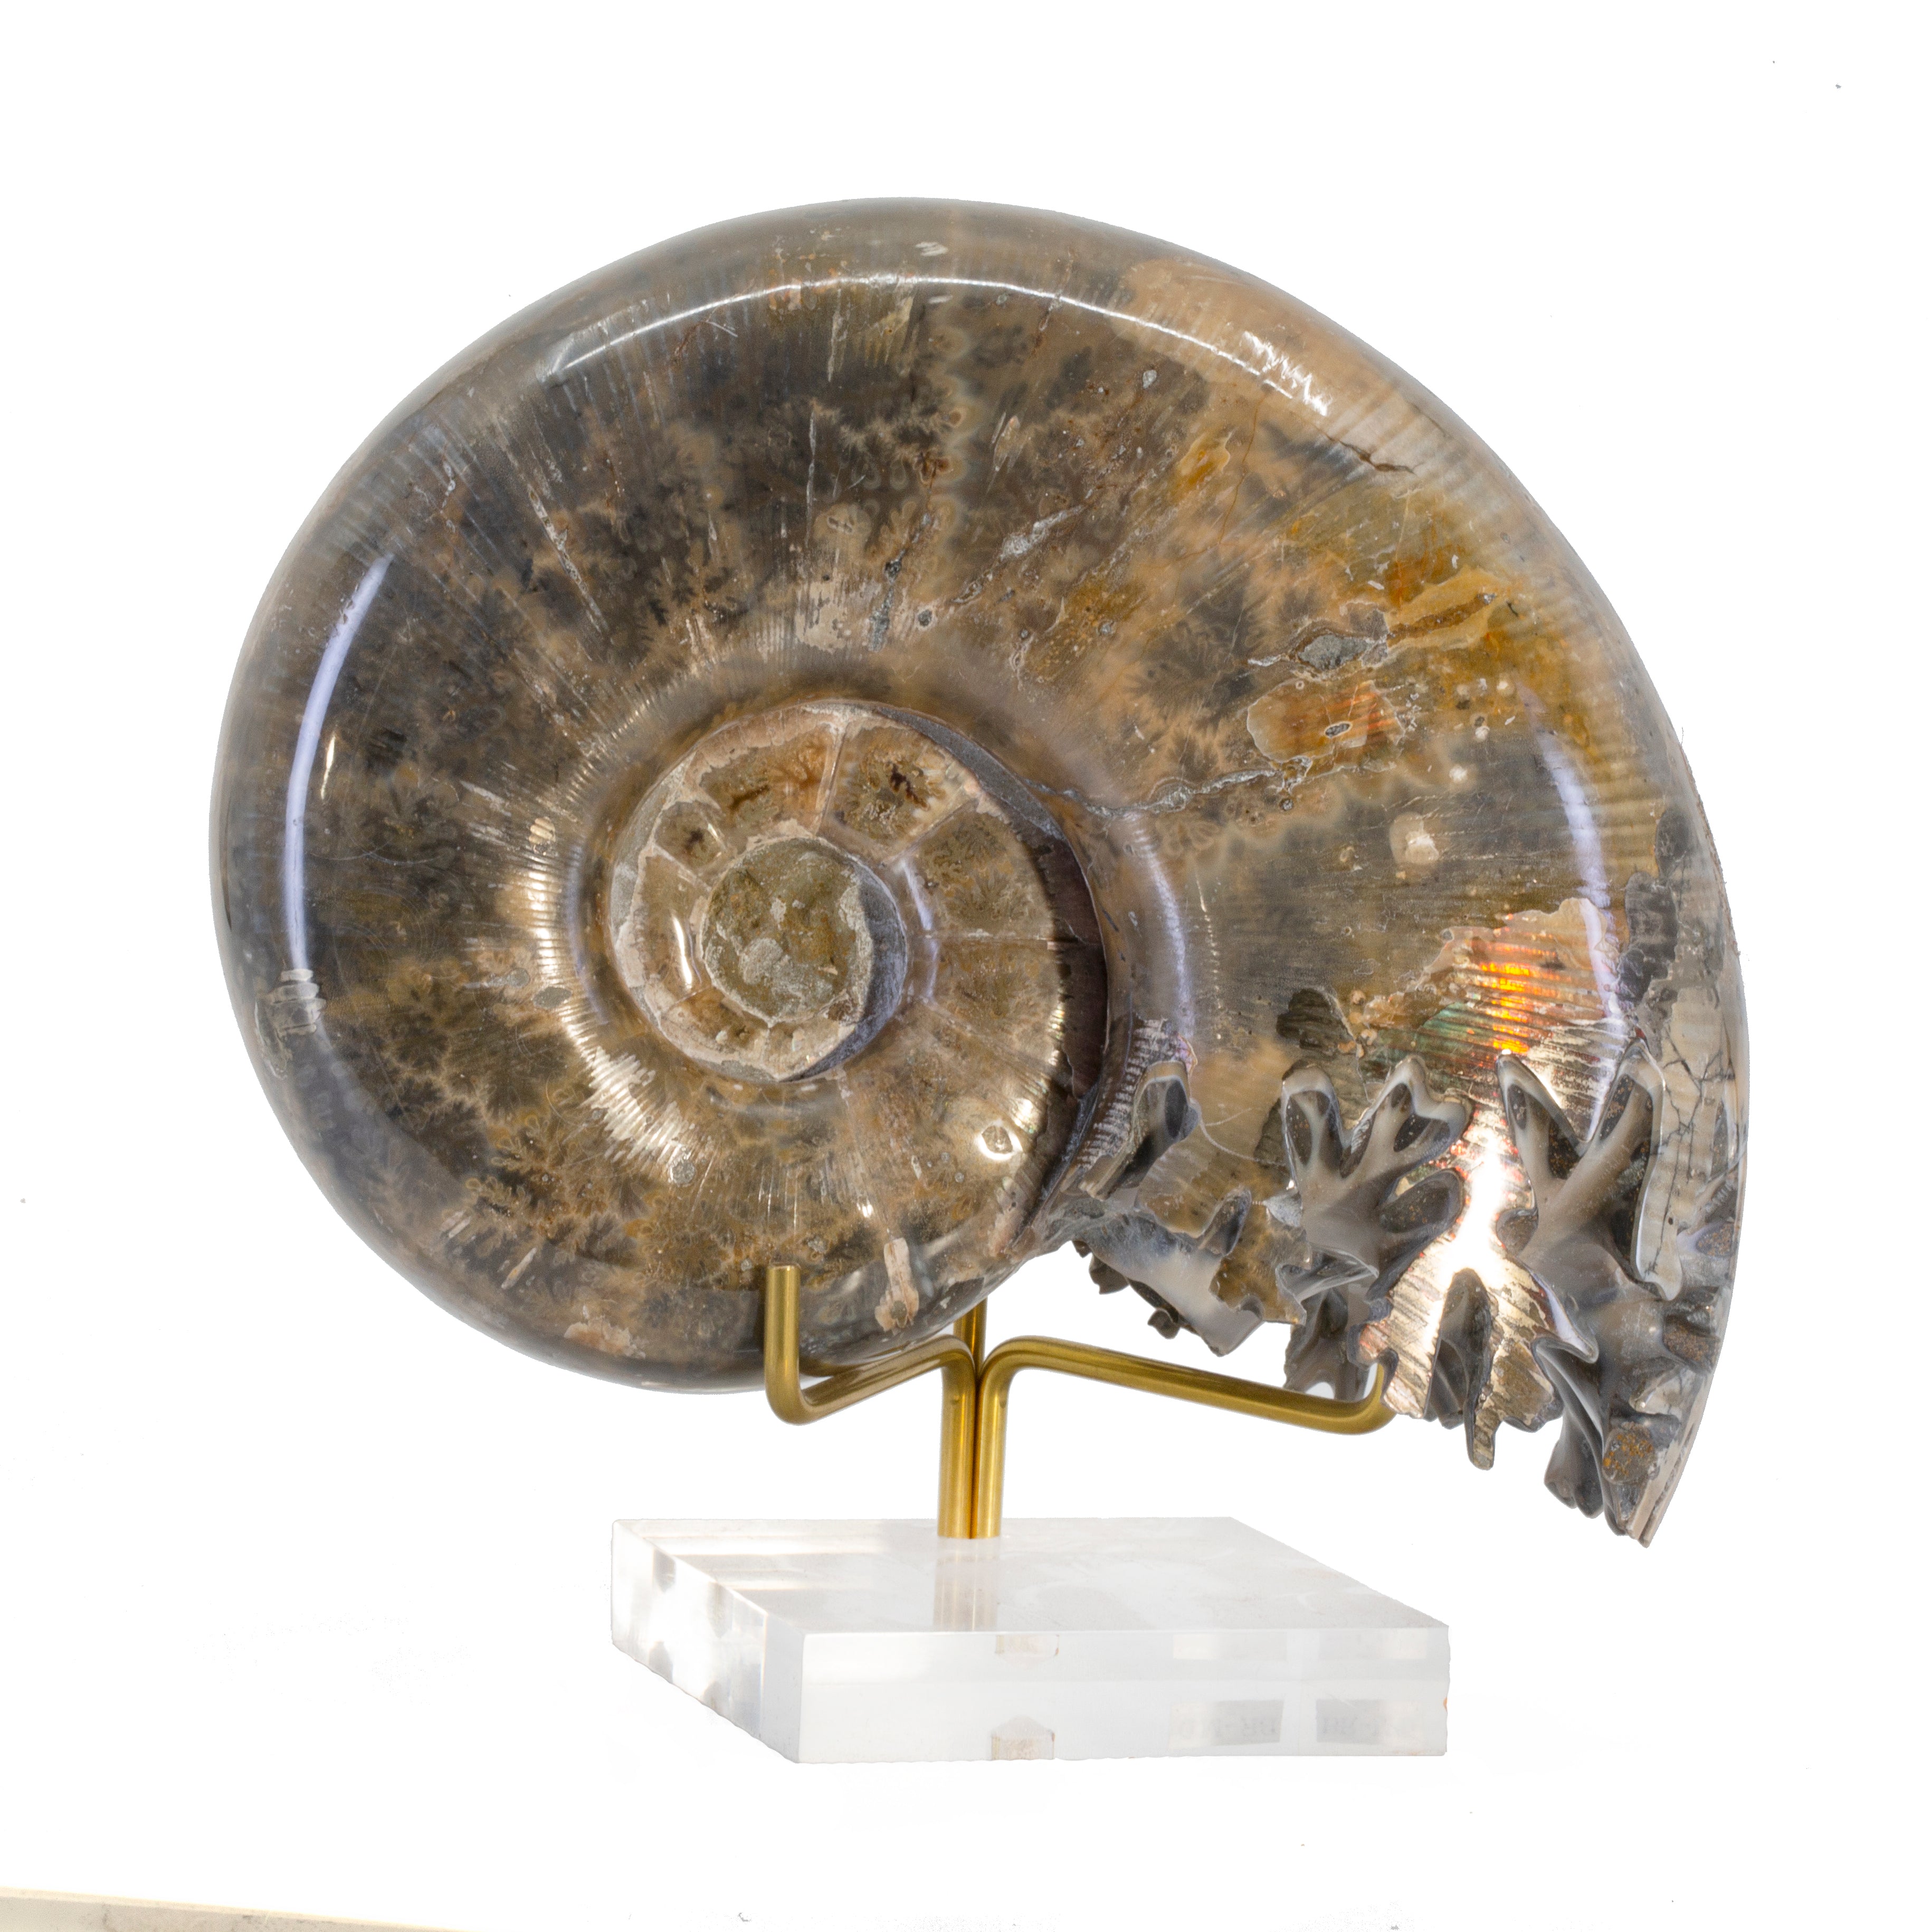 Lytoceros 2.9 lb 5.5 inch Ammonite Polished Fossil Specimen - Madagascar - HHH-067 - Crystalarium